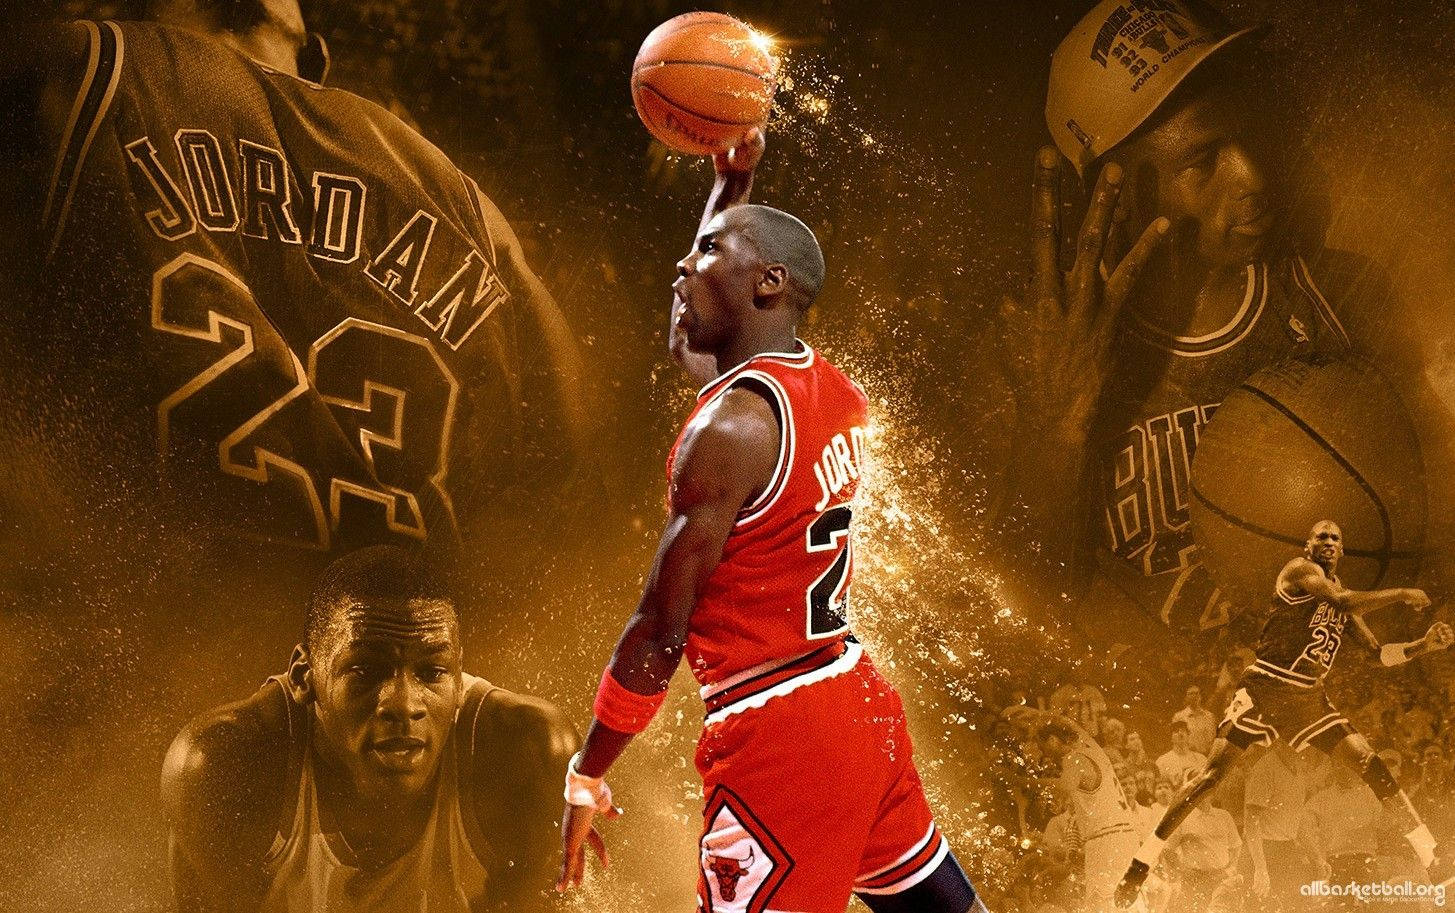 Michael Jordan 1455X913 Wallpaper and Background Image